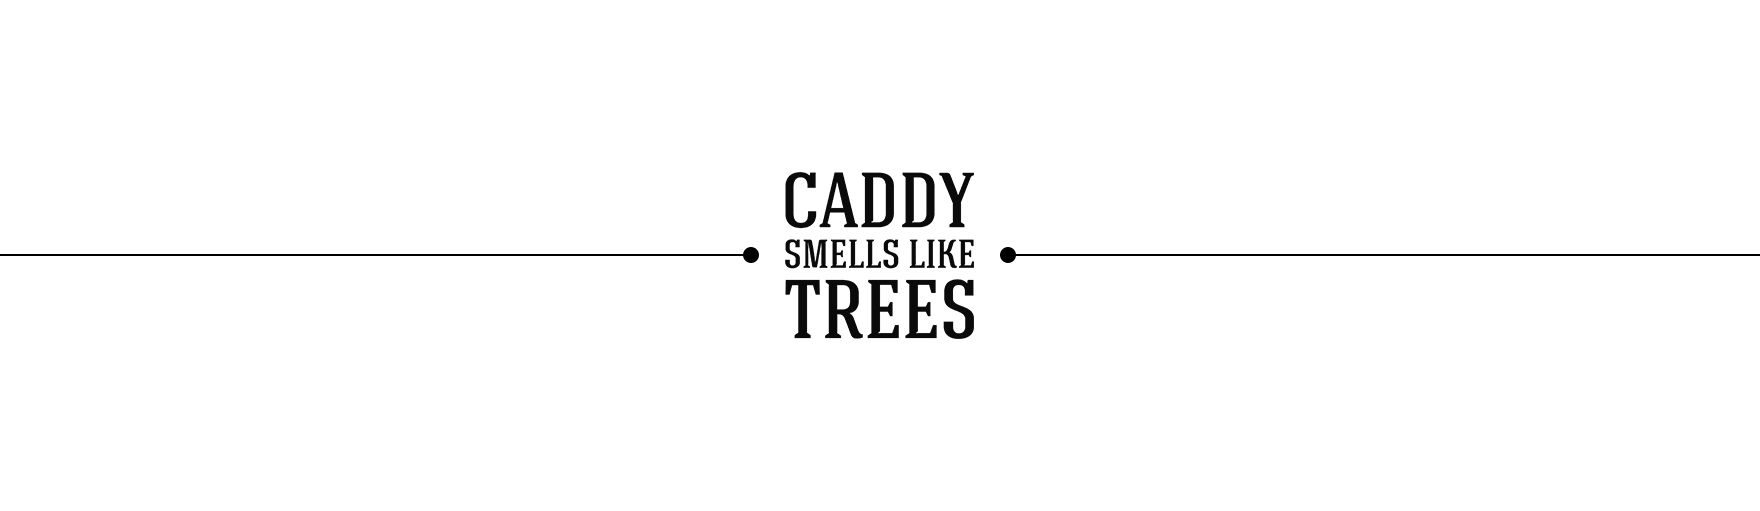 Caddy smells like trees logo